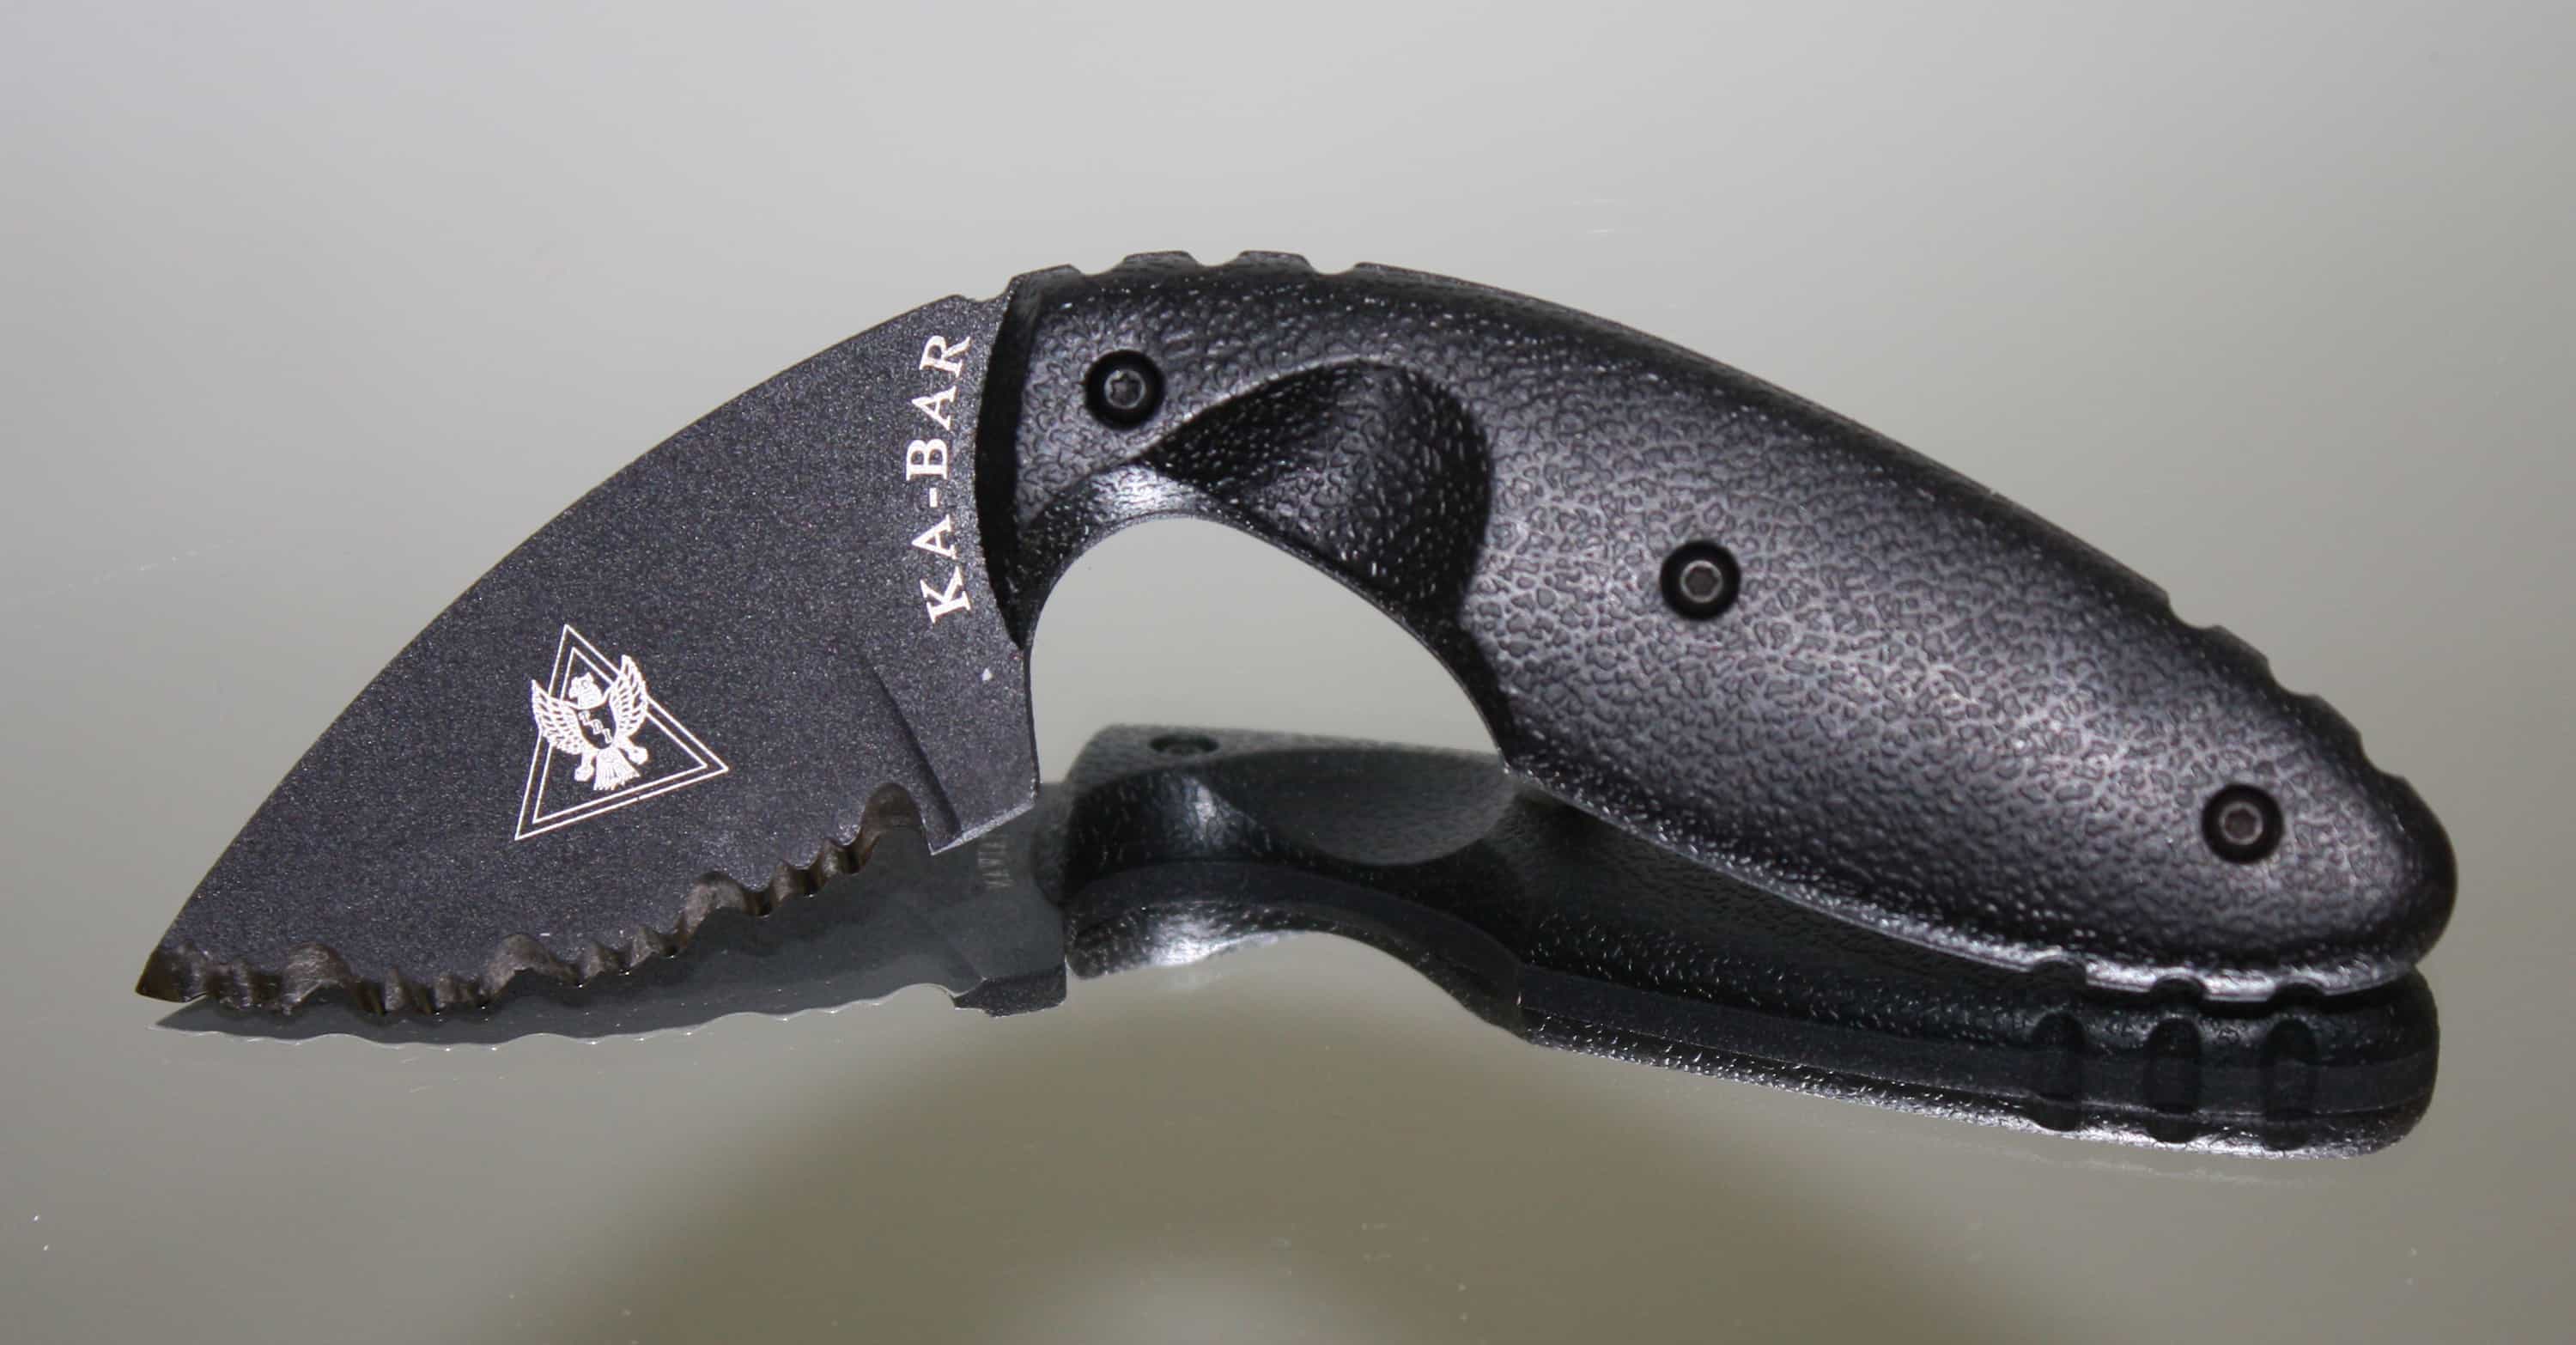 KA-BAR TDI Law Enforcement - self defense knife